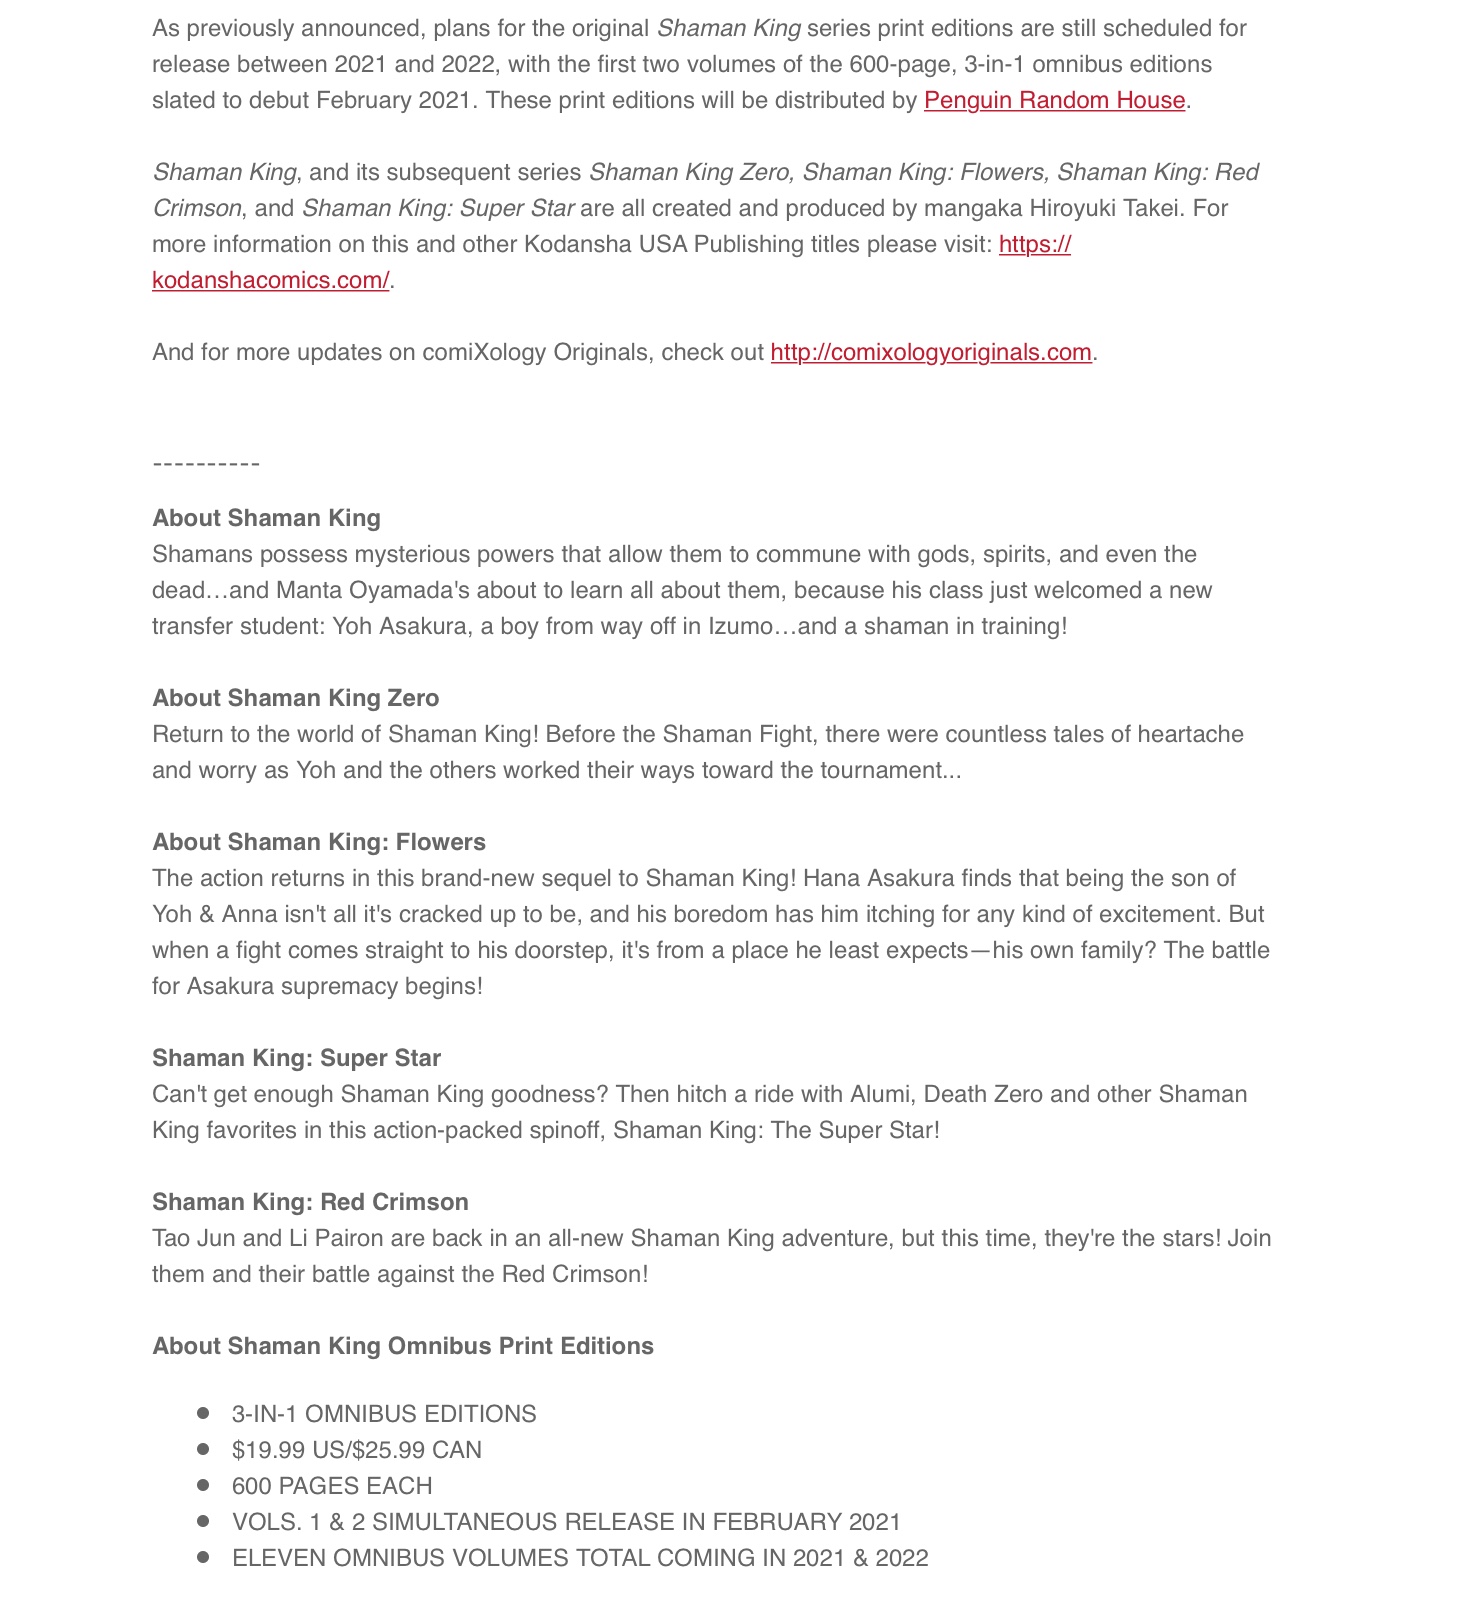 Theoasg Kodansha Comics Has Announced Today That Hiroyuki Takei S Shaman King Comixology Originals Will Now Be Released October 6 Shaman King Zero On October 13 Shaman King